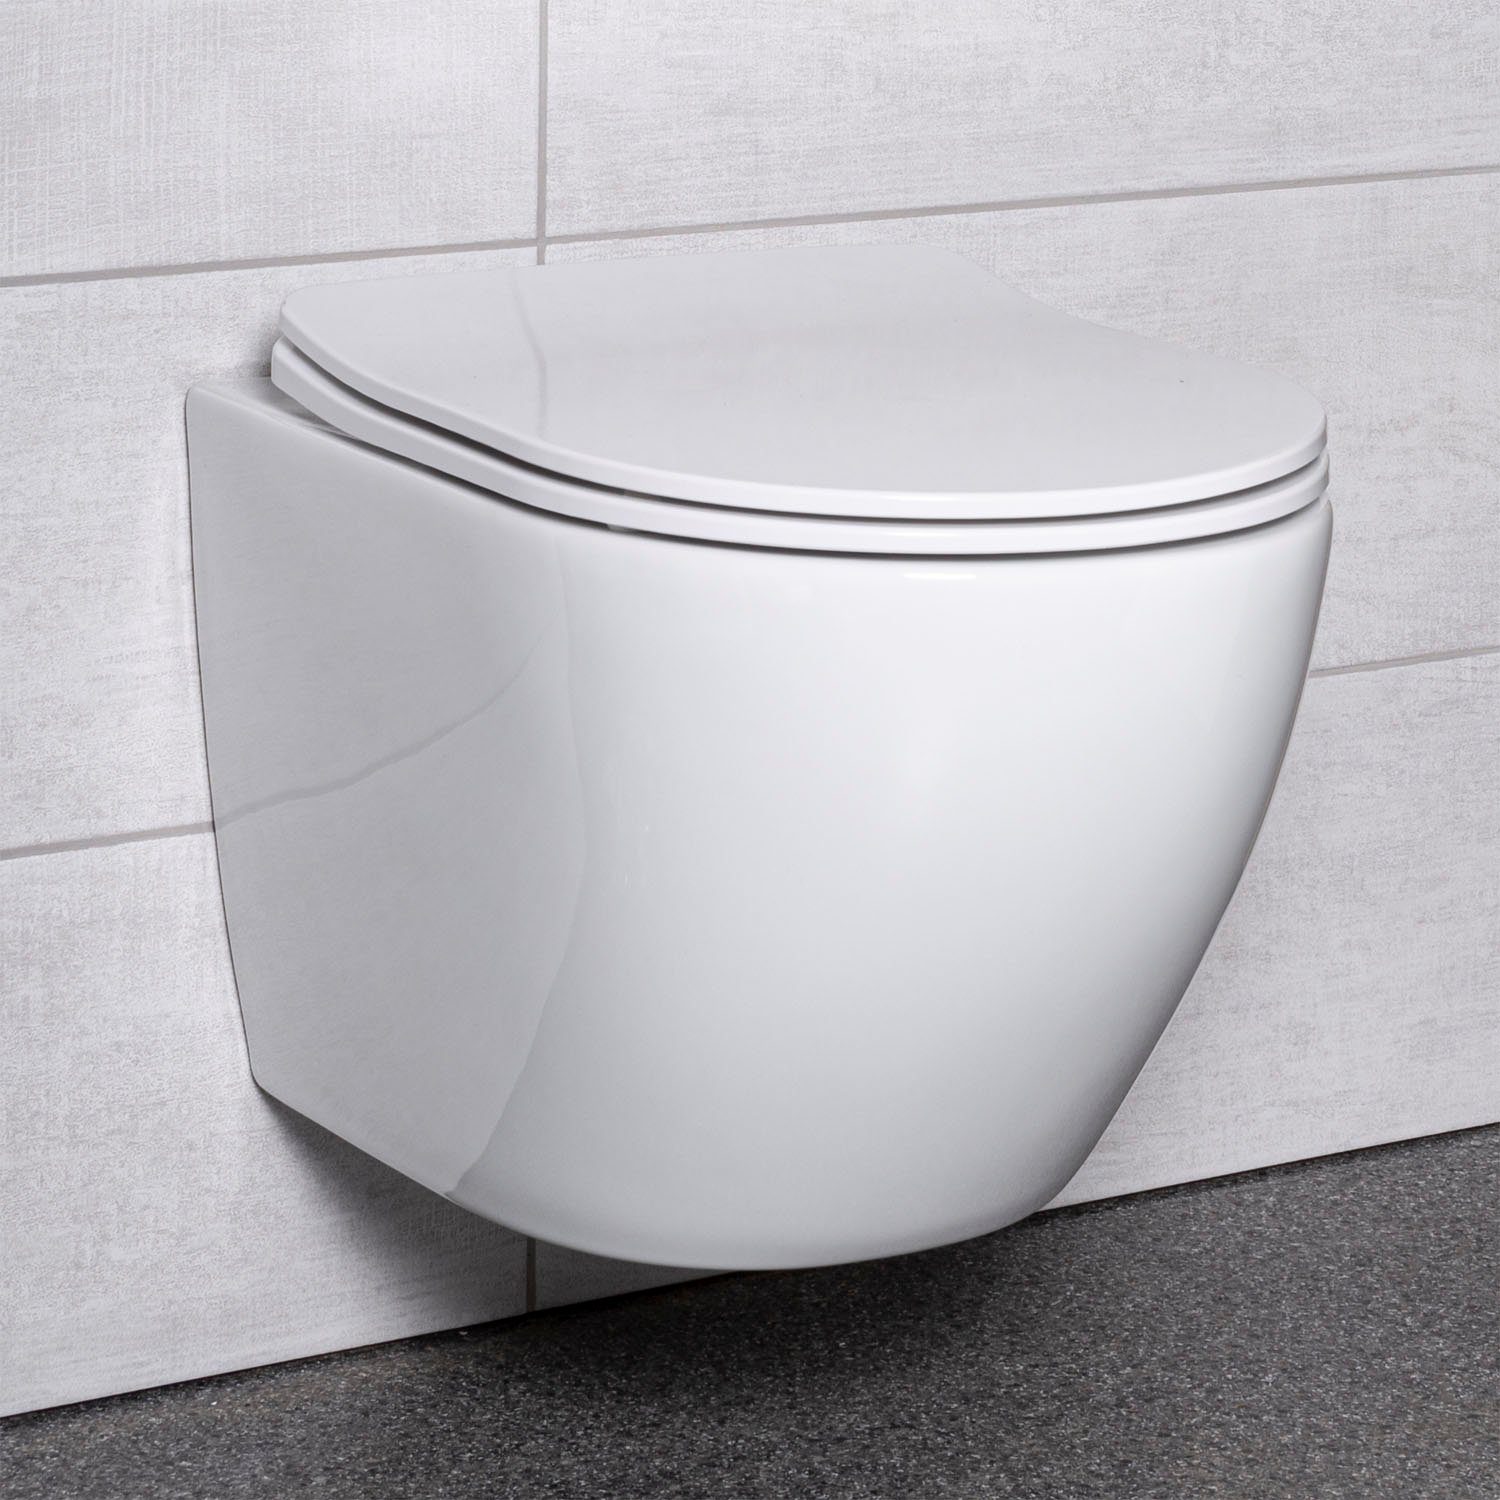 KOLMAN Tiefspül-WC Spülrandlos Wand-WC Delos, mit Weiß, Soft-close Slim WC- Sitz Schallschutzmatte und